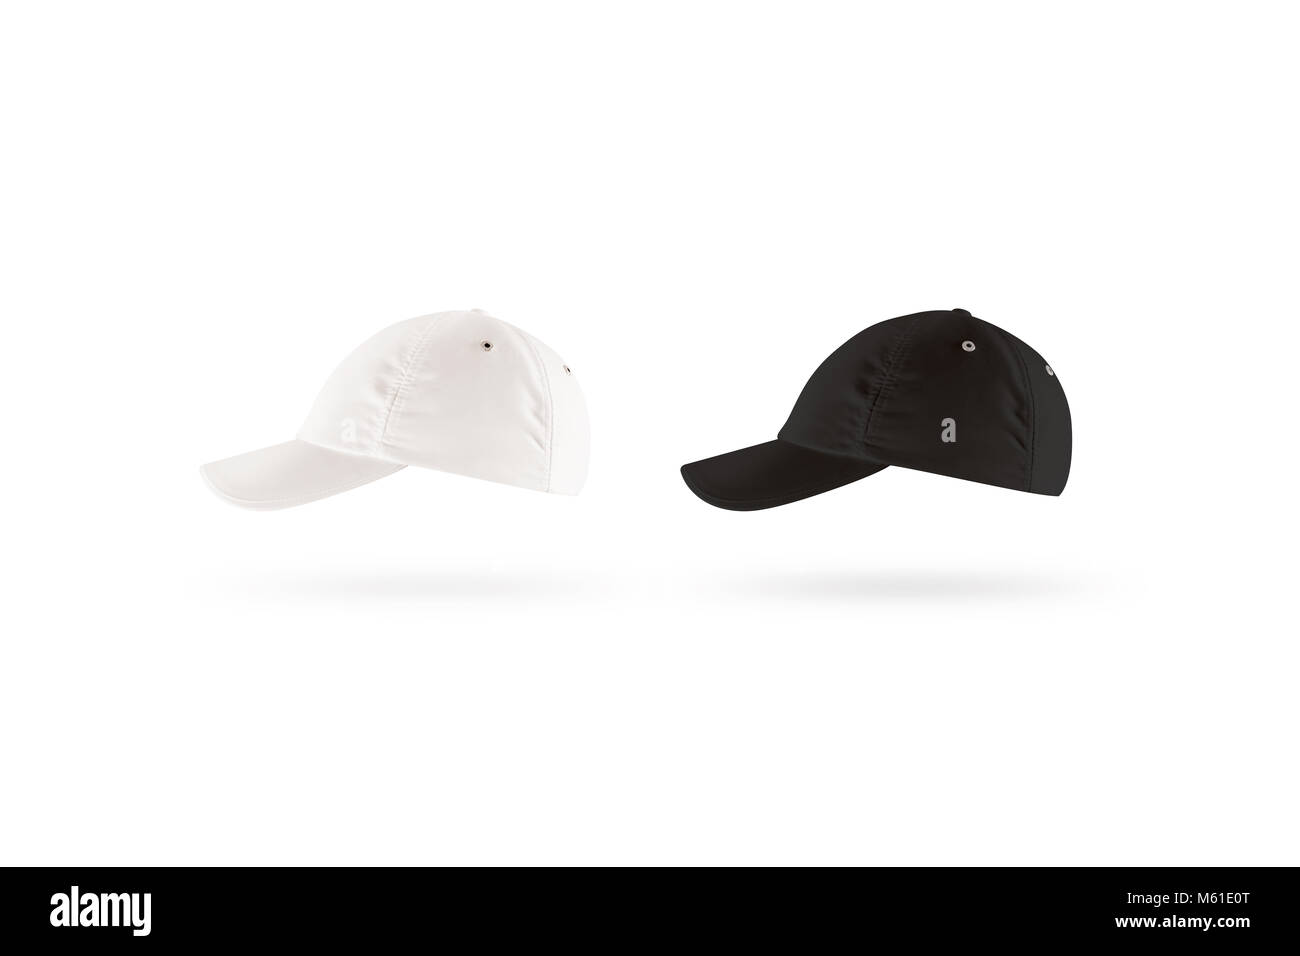 Download Blank black and white baseball cap mockup set, profile ...